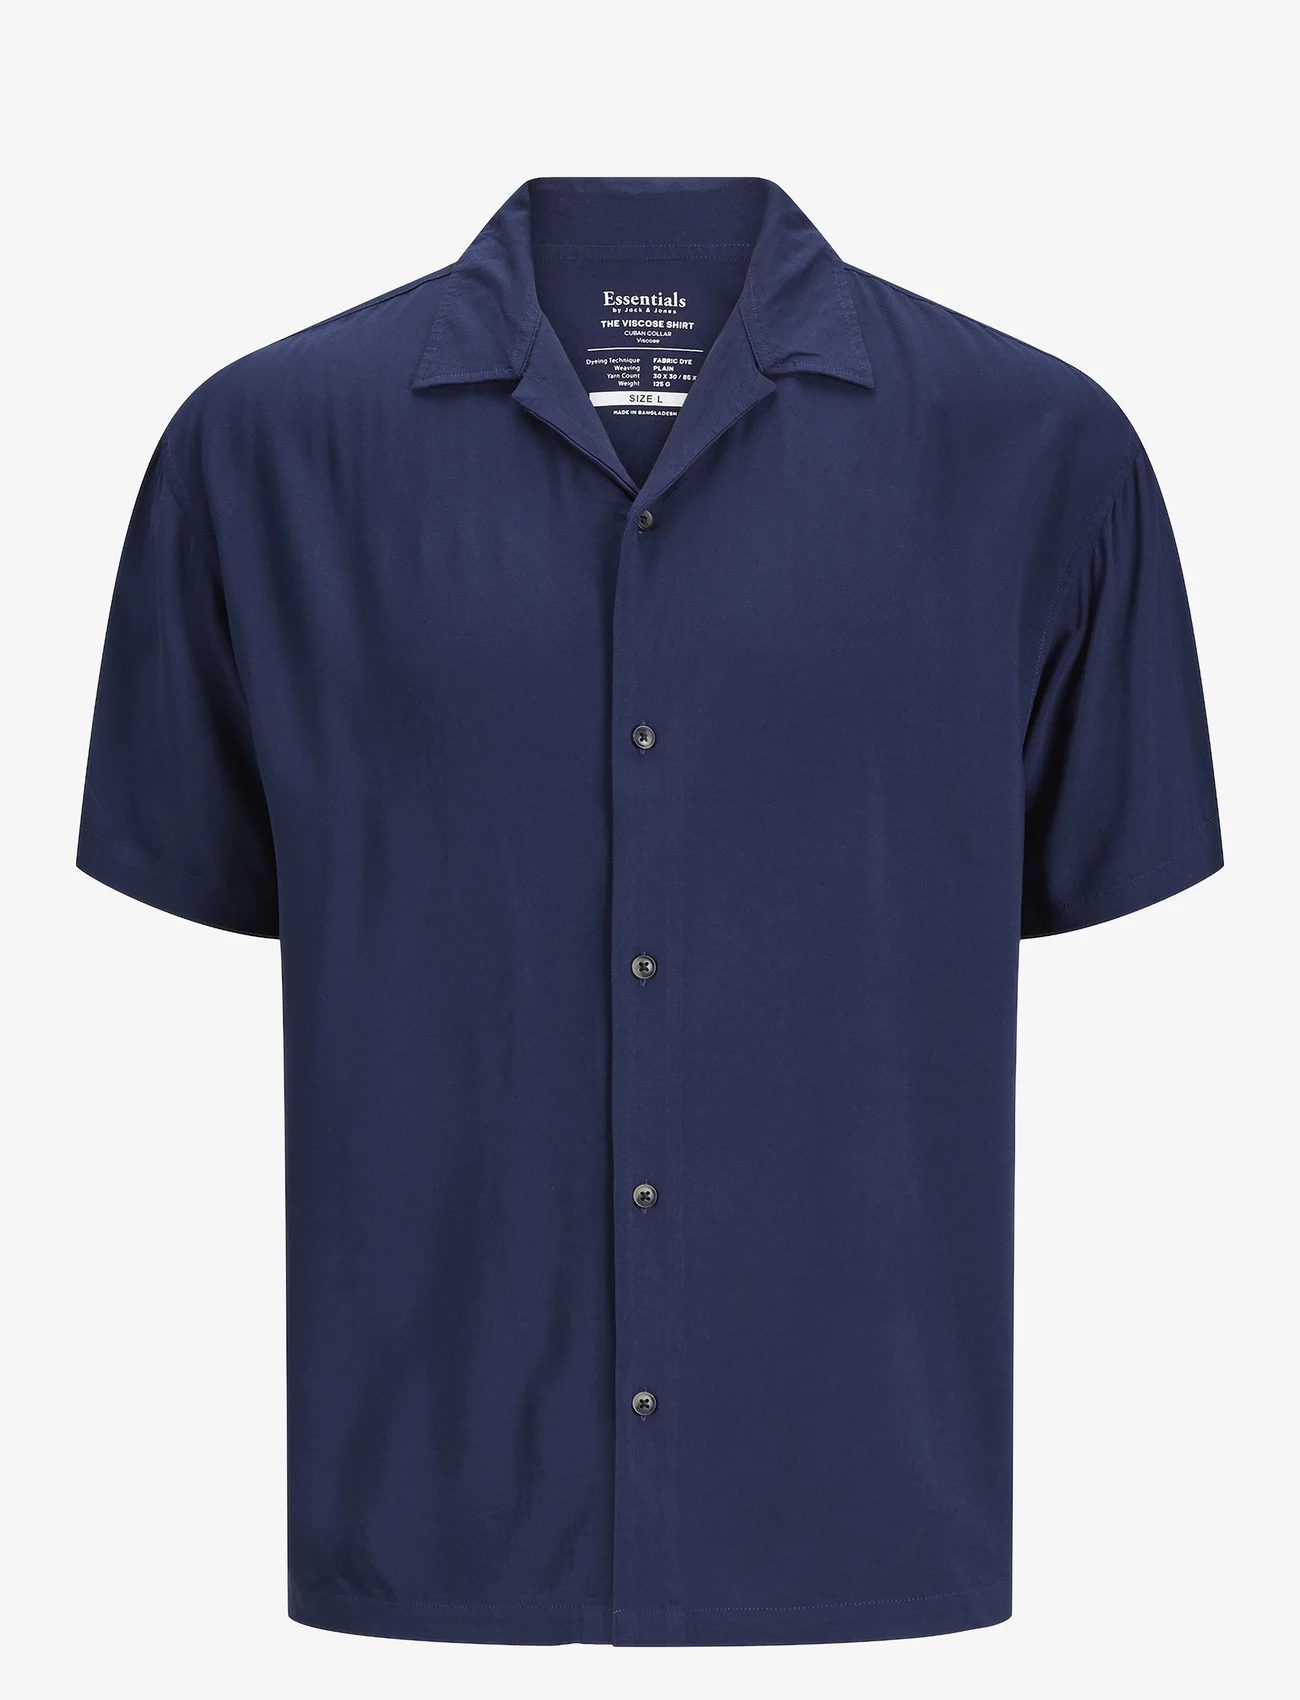 Jack & Jones - JJEJEFF SOLID RESORT SHIRT SS SN - kortærmede t-shirts - navy blazer - 0